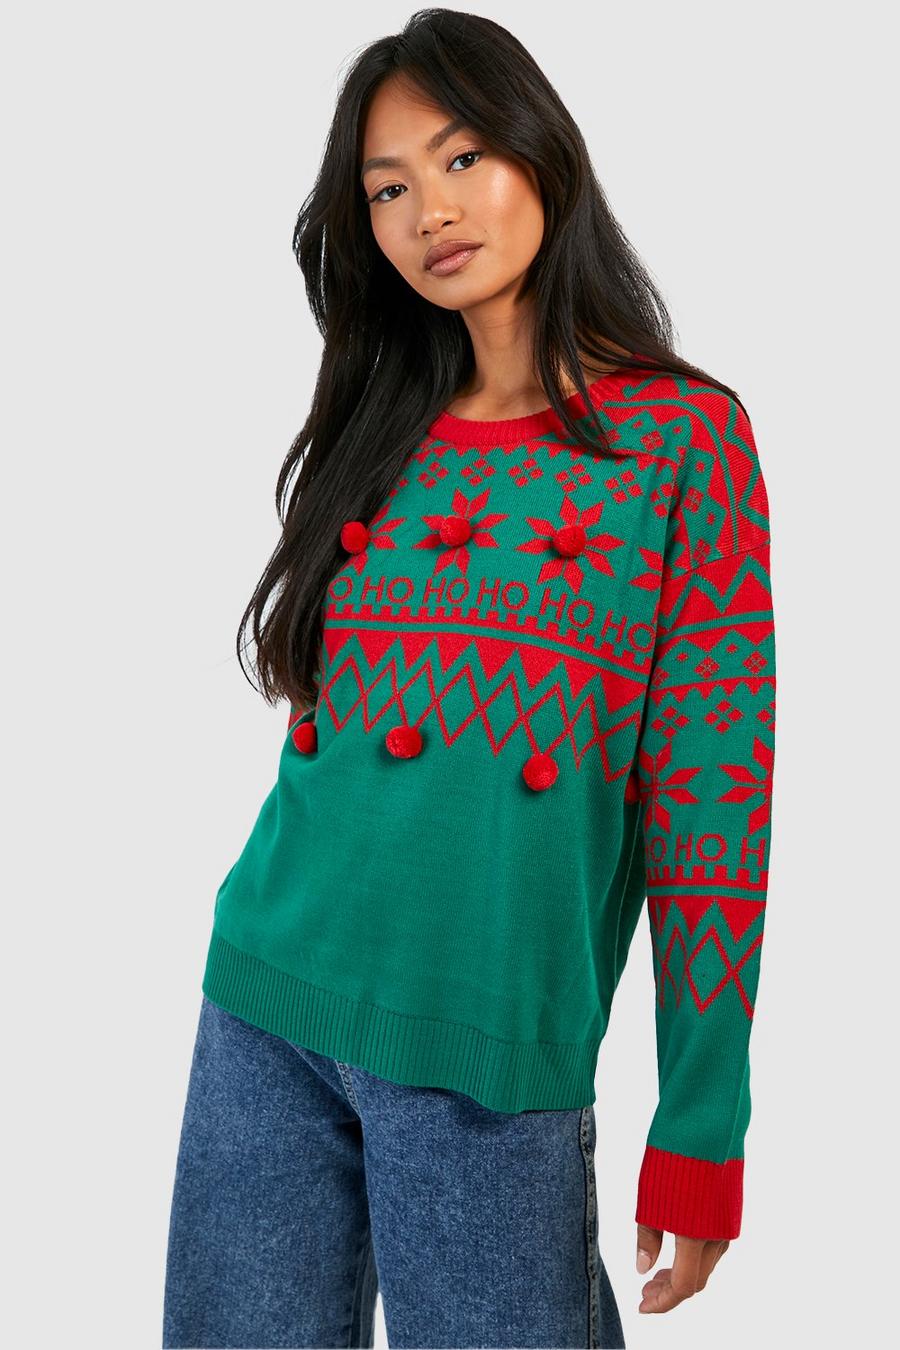 HoHoHo Weihnachtspullover mit Pom-Poms, Green